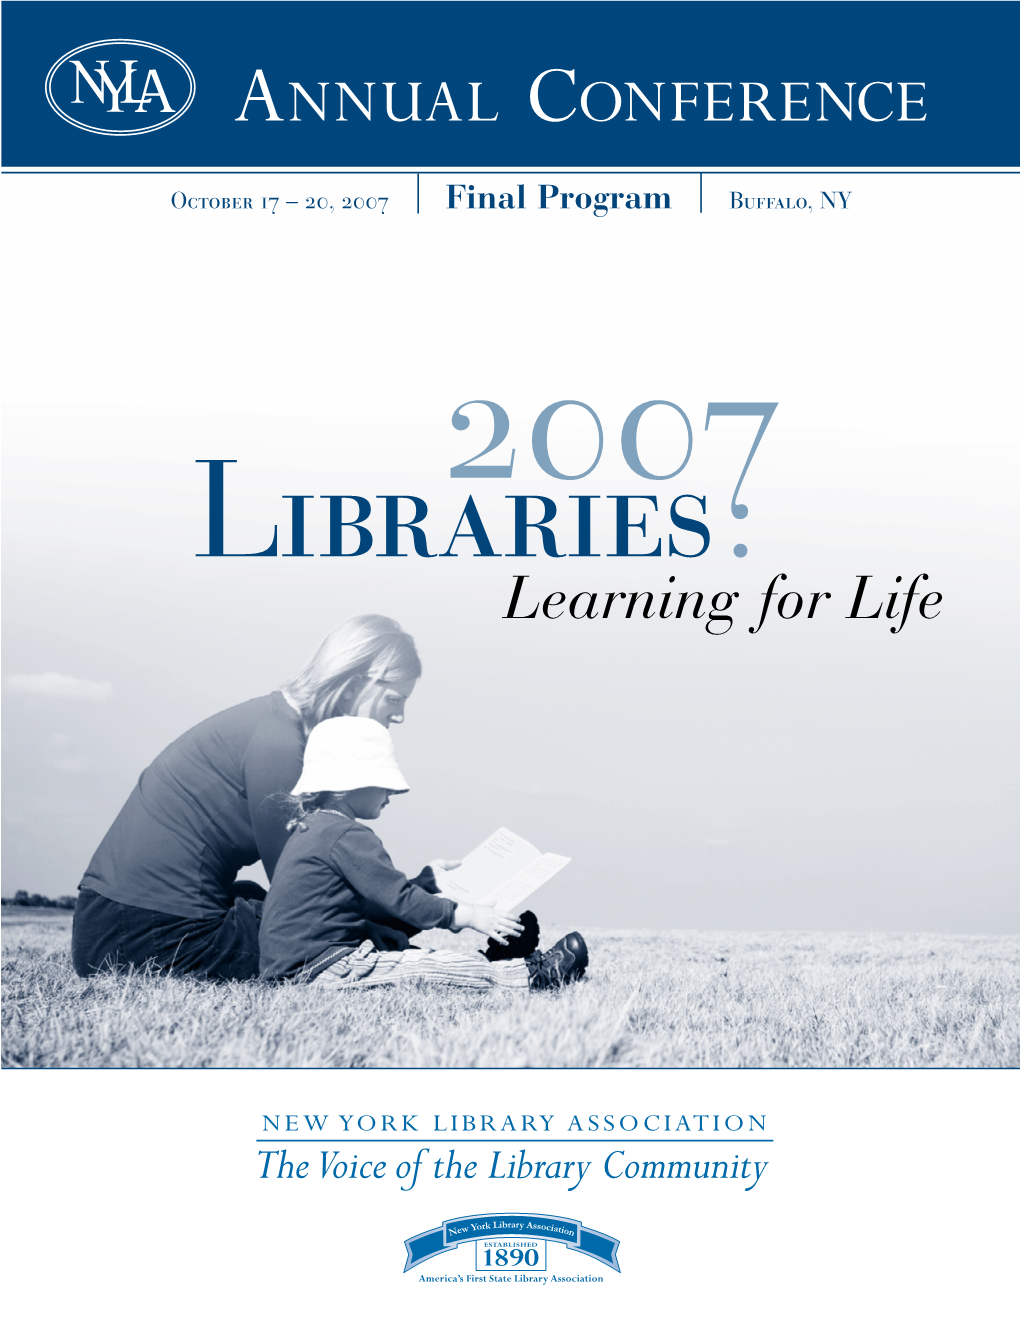 2007 Final Program Buffalo, NY 2007 Libraries Learning for Life the 2007 NYLA Conference Program